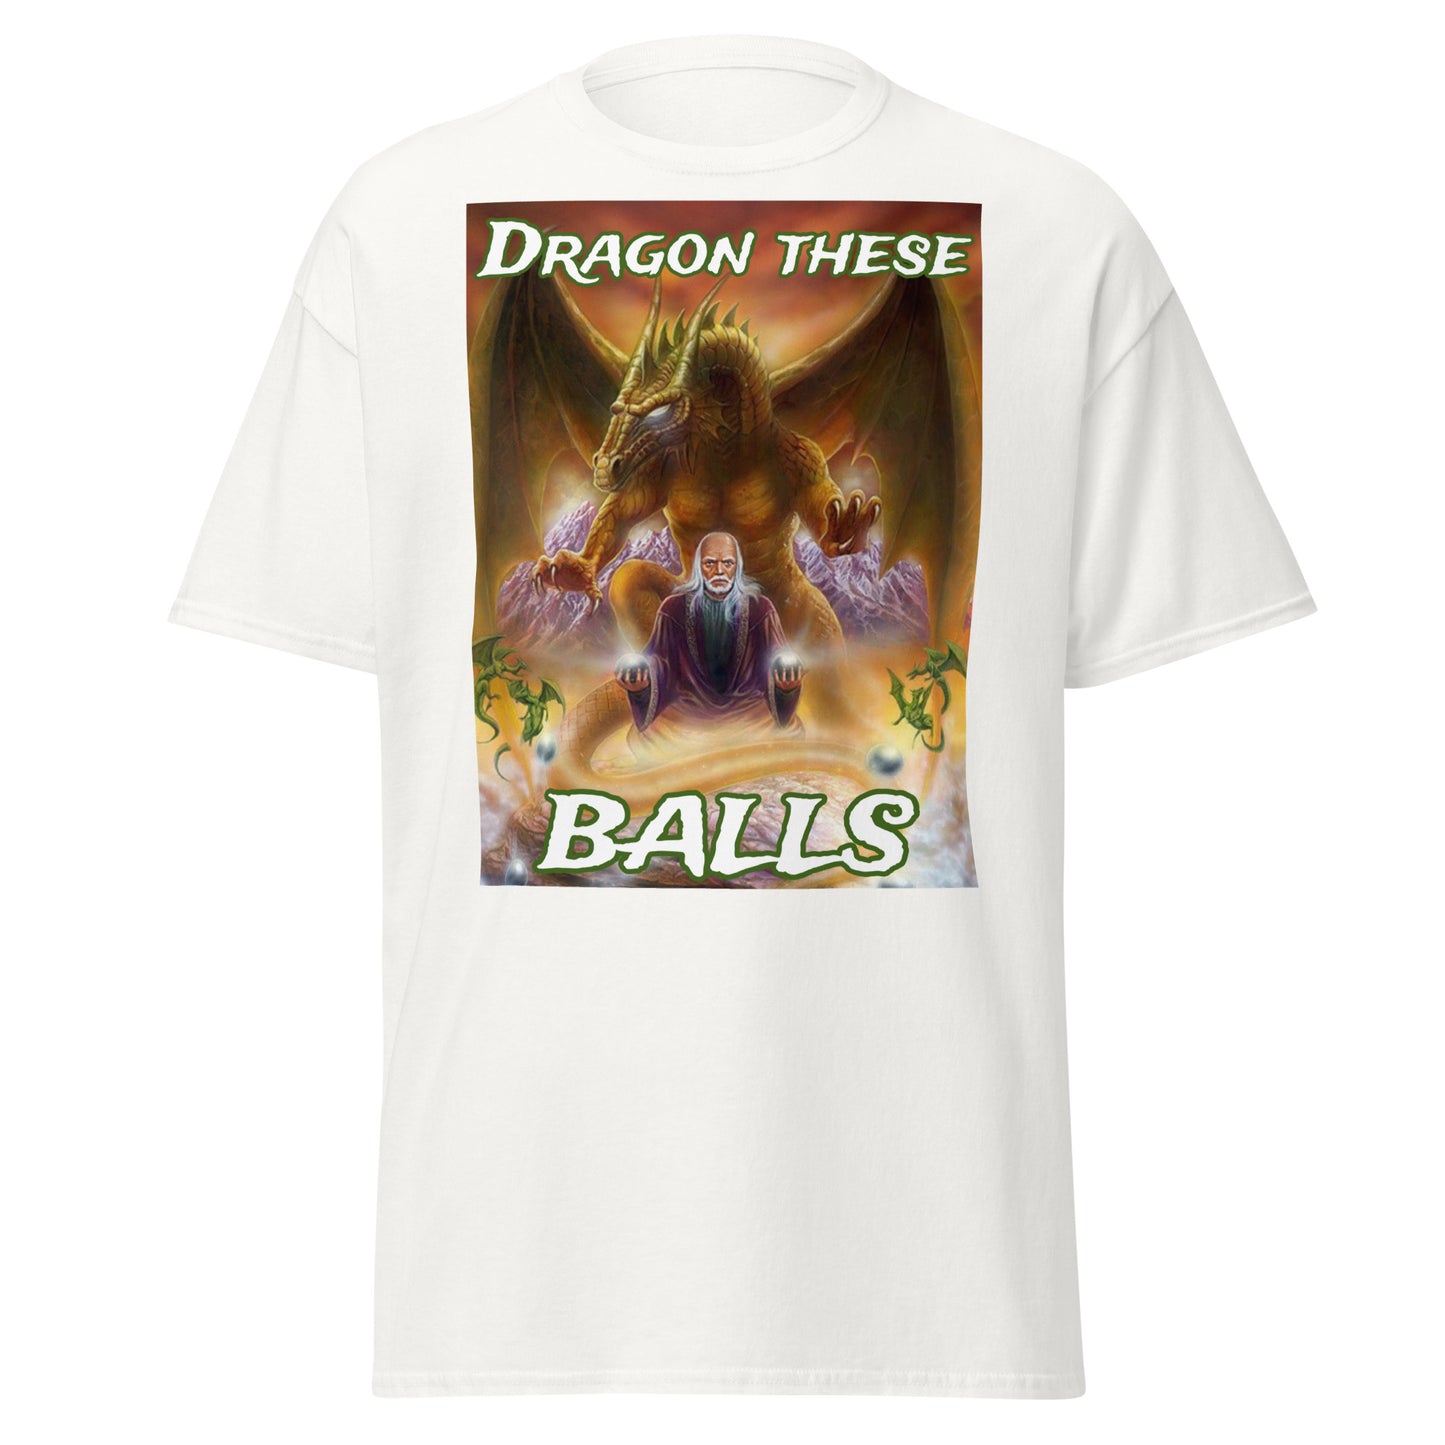 Dragon these balls